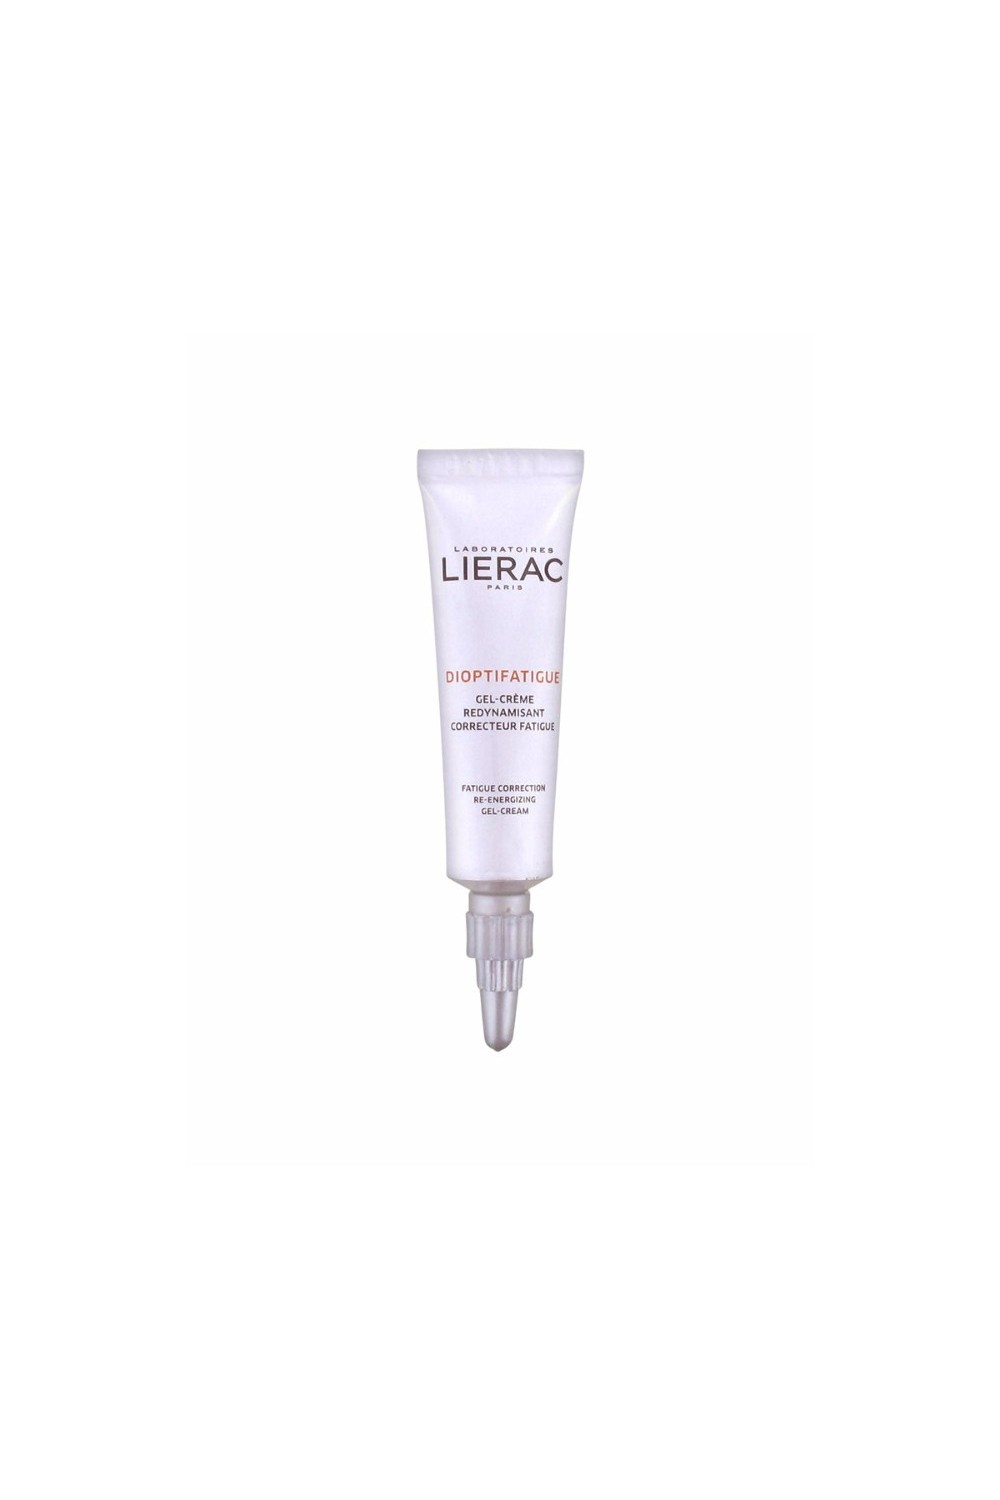 Lierac Dioptifatigue Re Energizing Gel Cream 15ml